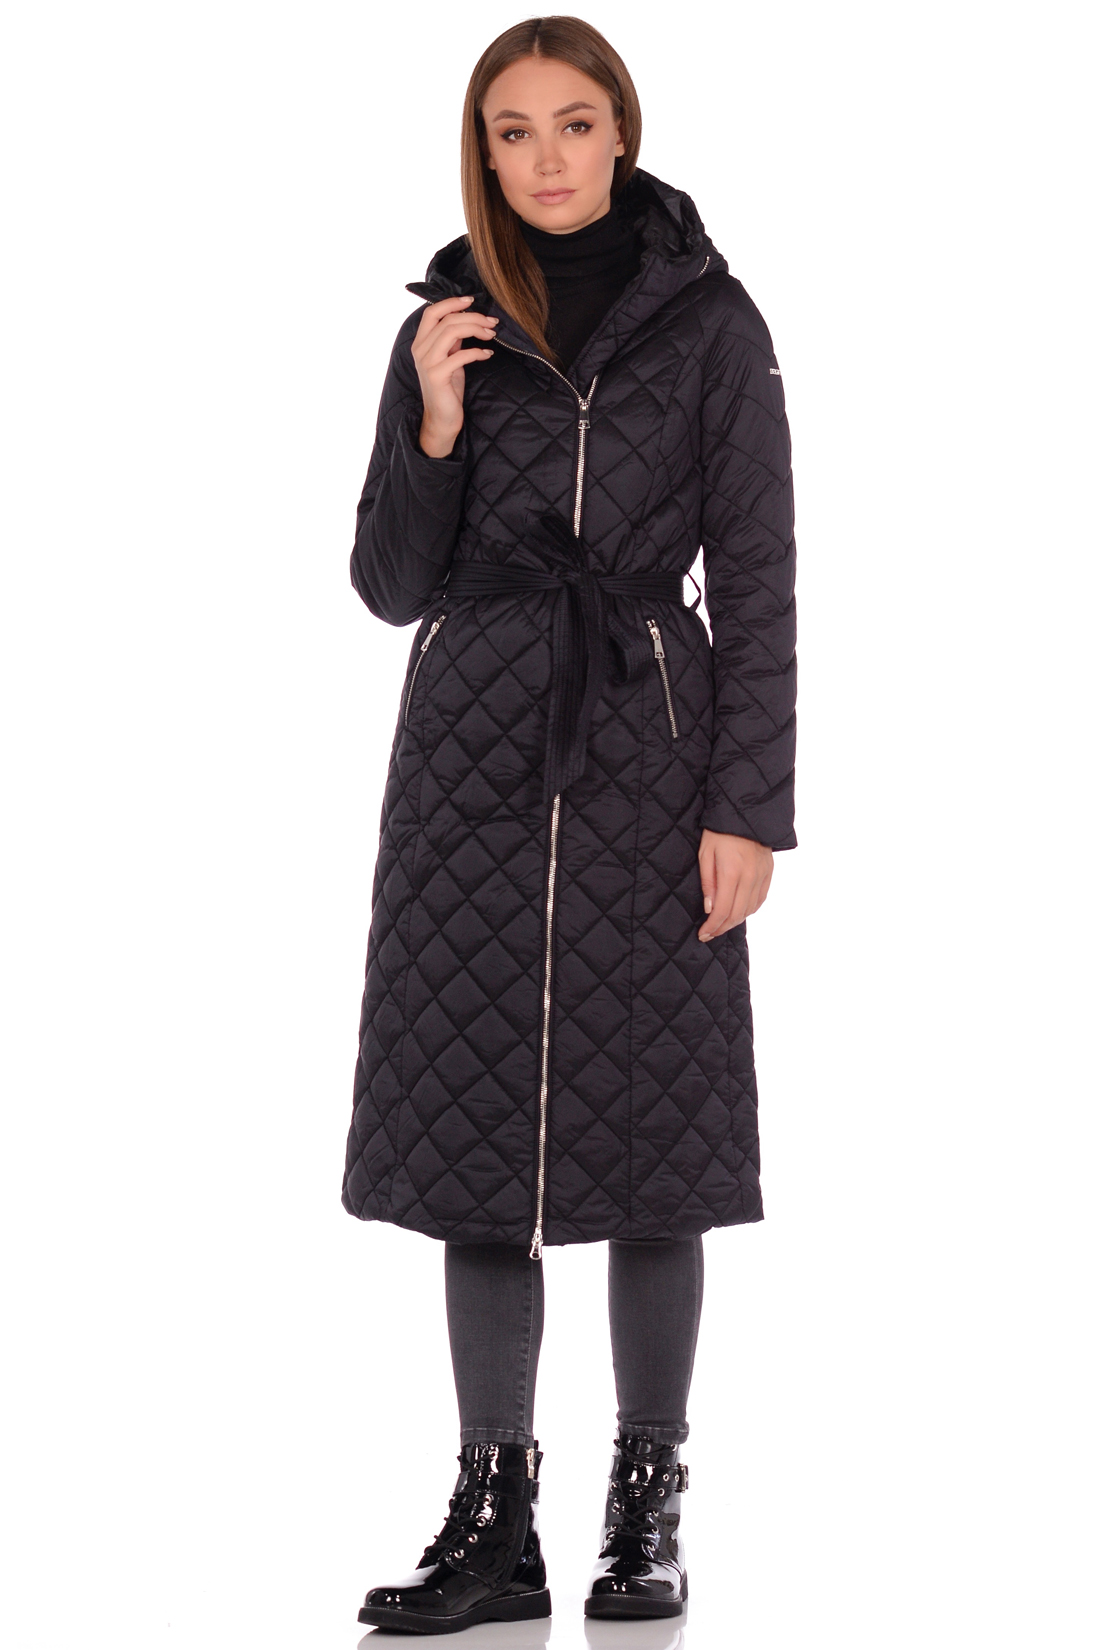 Длинная стёганая куртка (арт. baon B038547), размер L, цвет черный Длинная стёганая куртка (арт. baon B038547) - фото 1